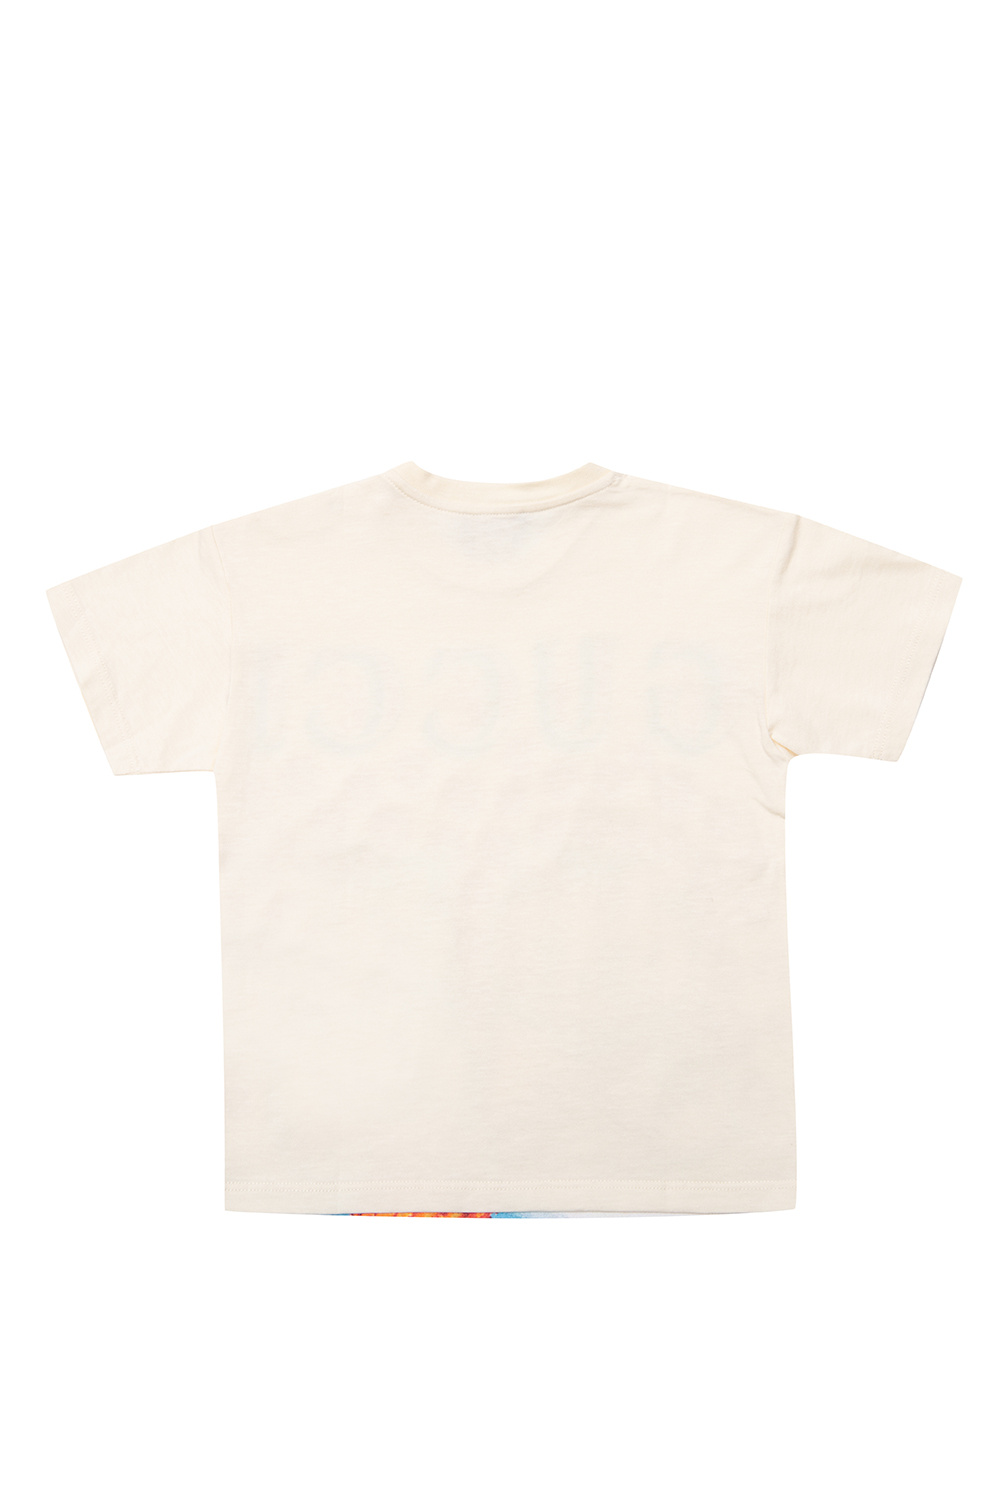 gucci tape Kids Printed T-shirt